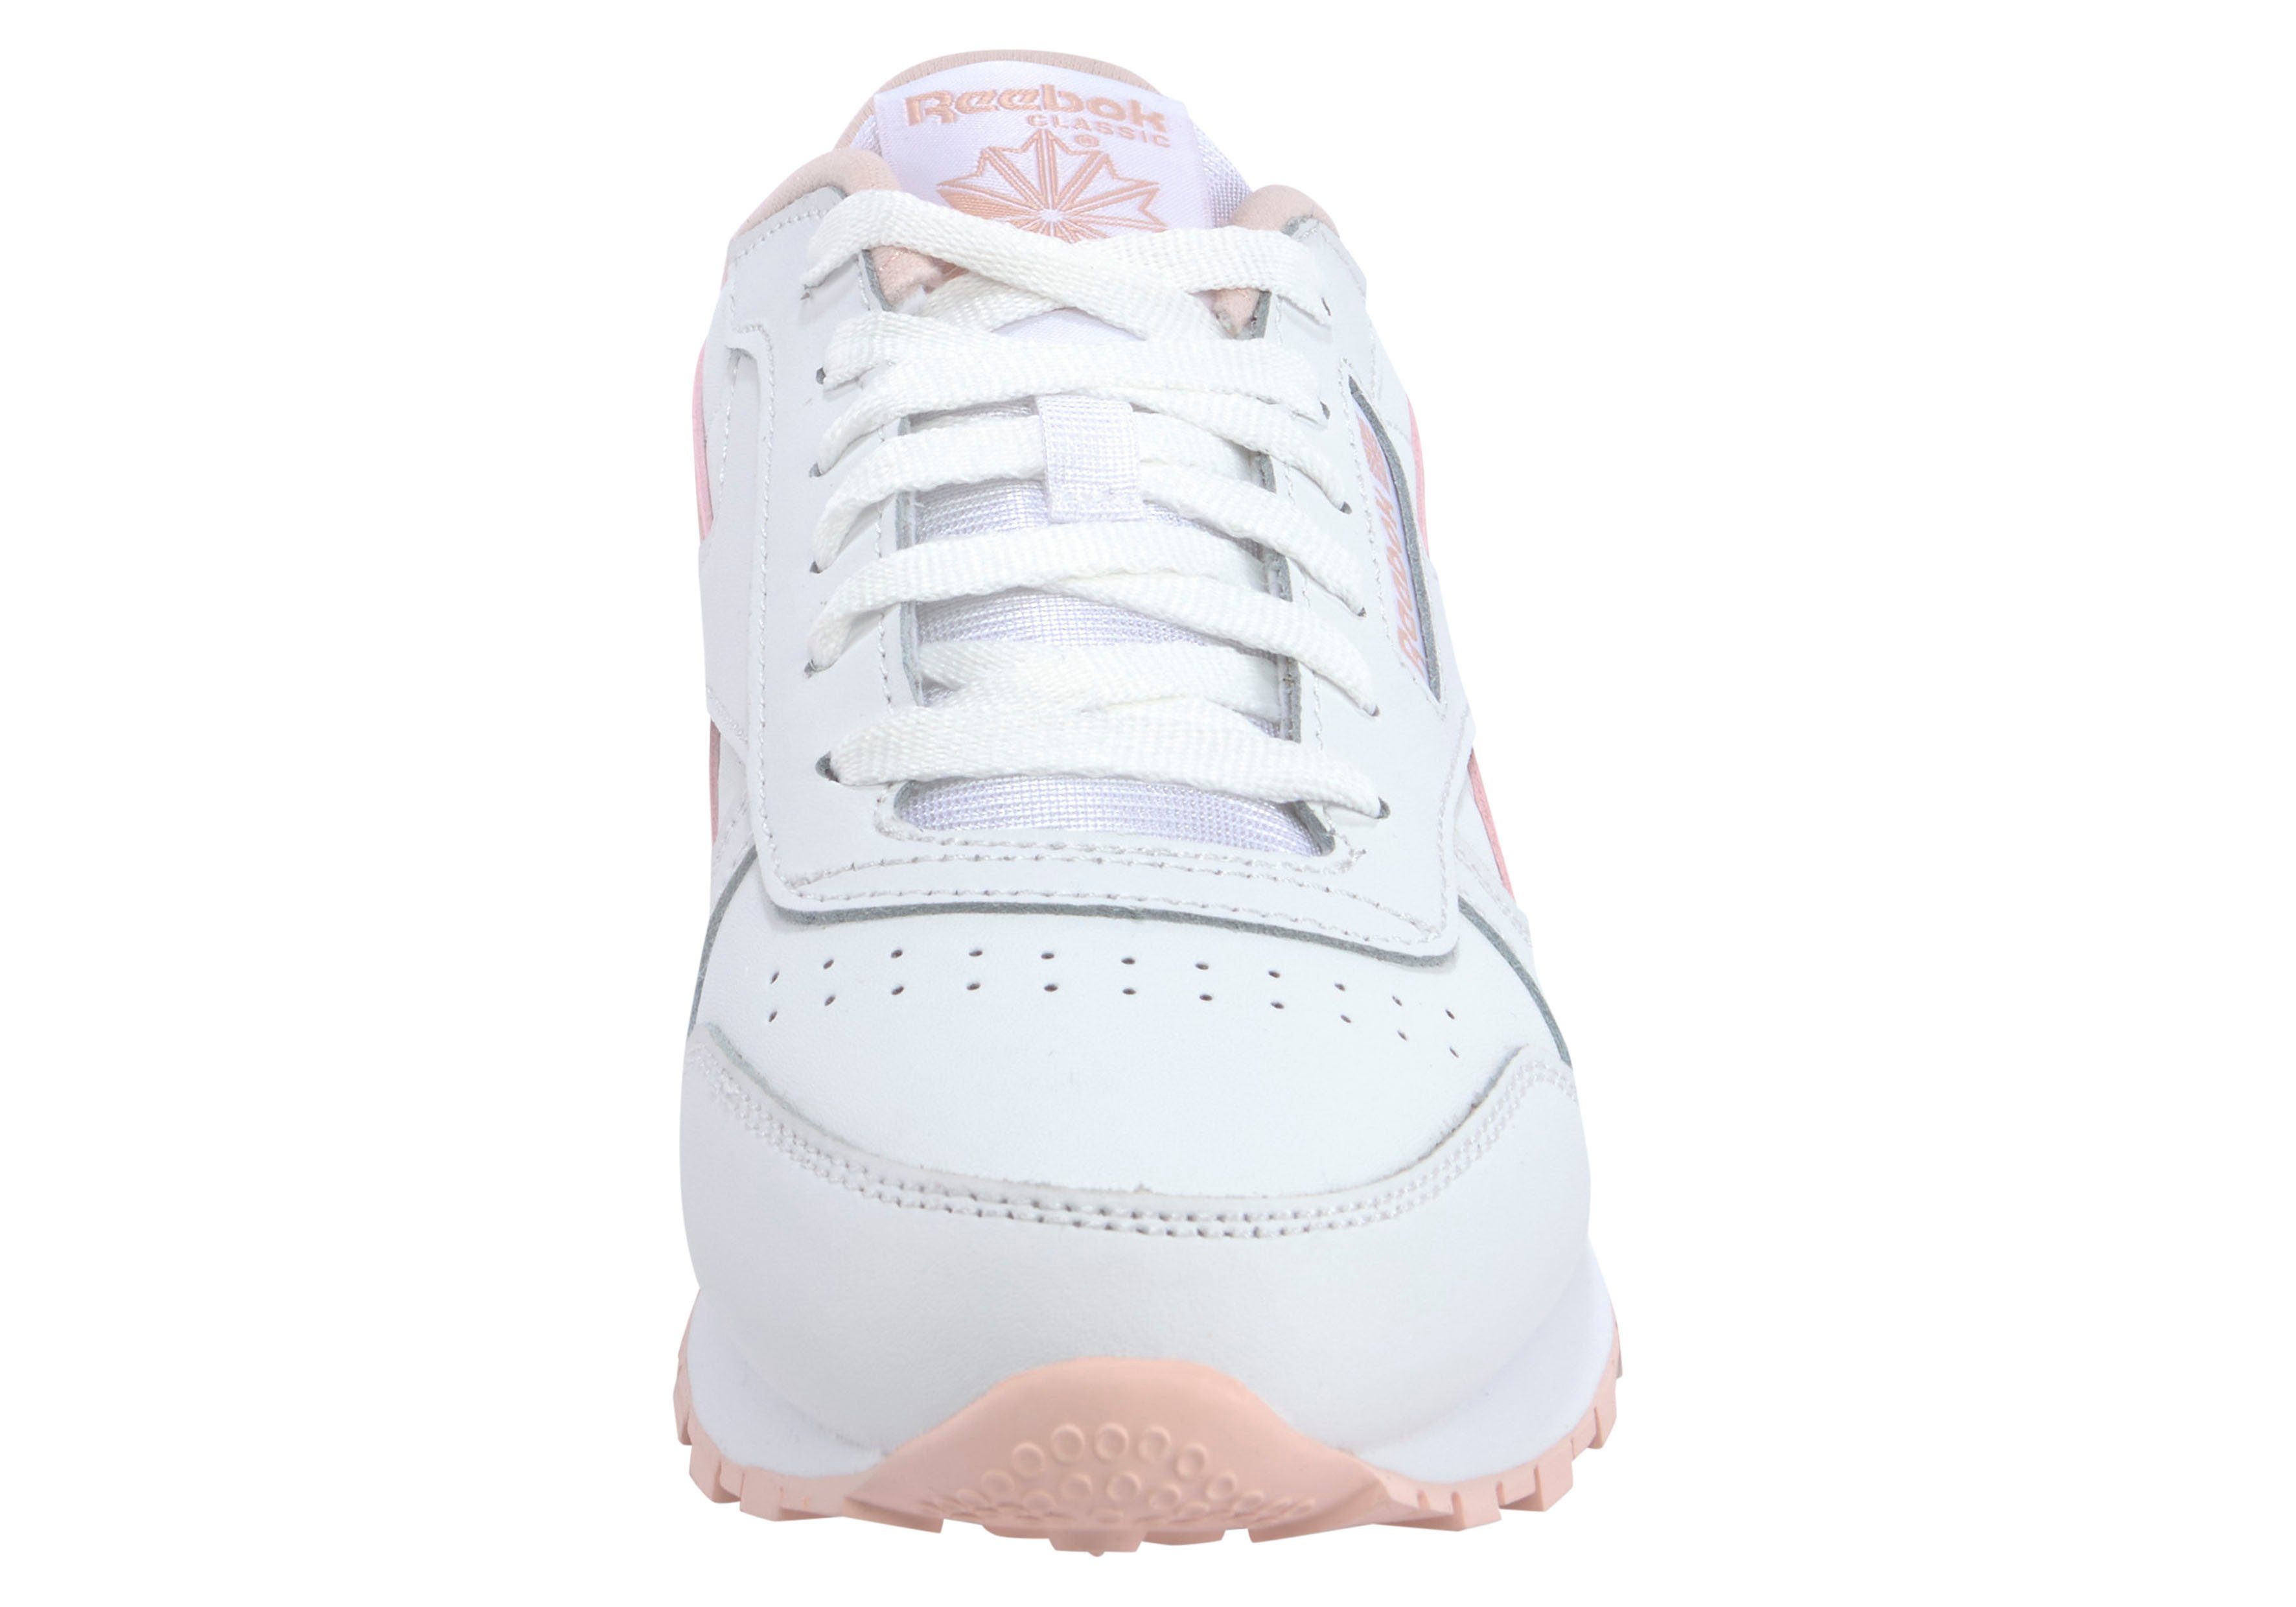 Sneaker Classic CLASSIC weiß-apricot LEATHER Reebok